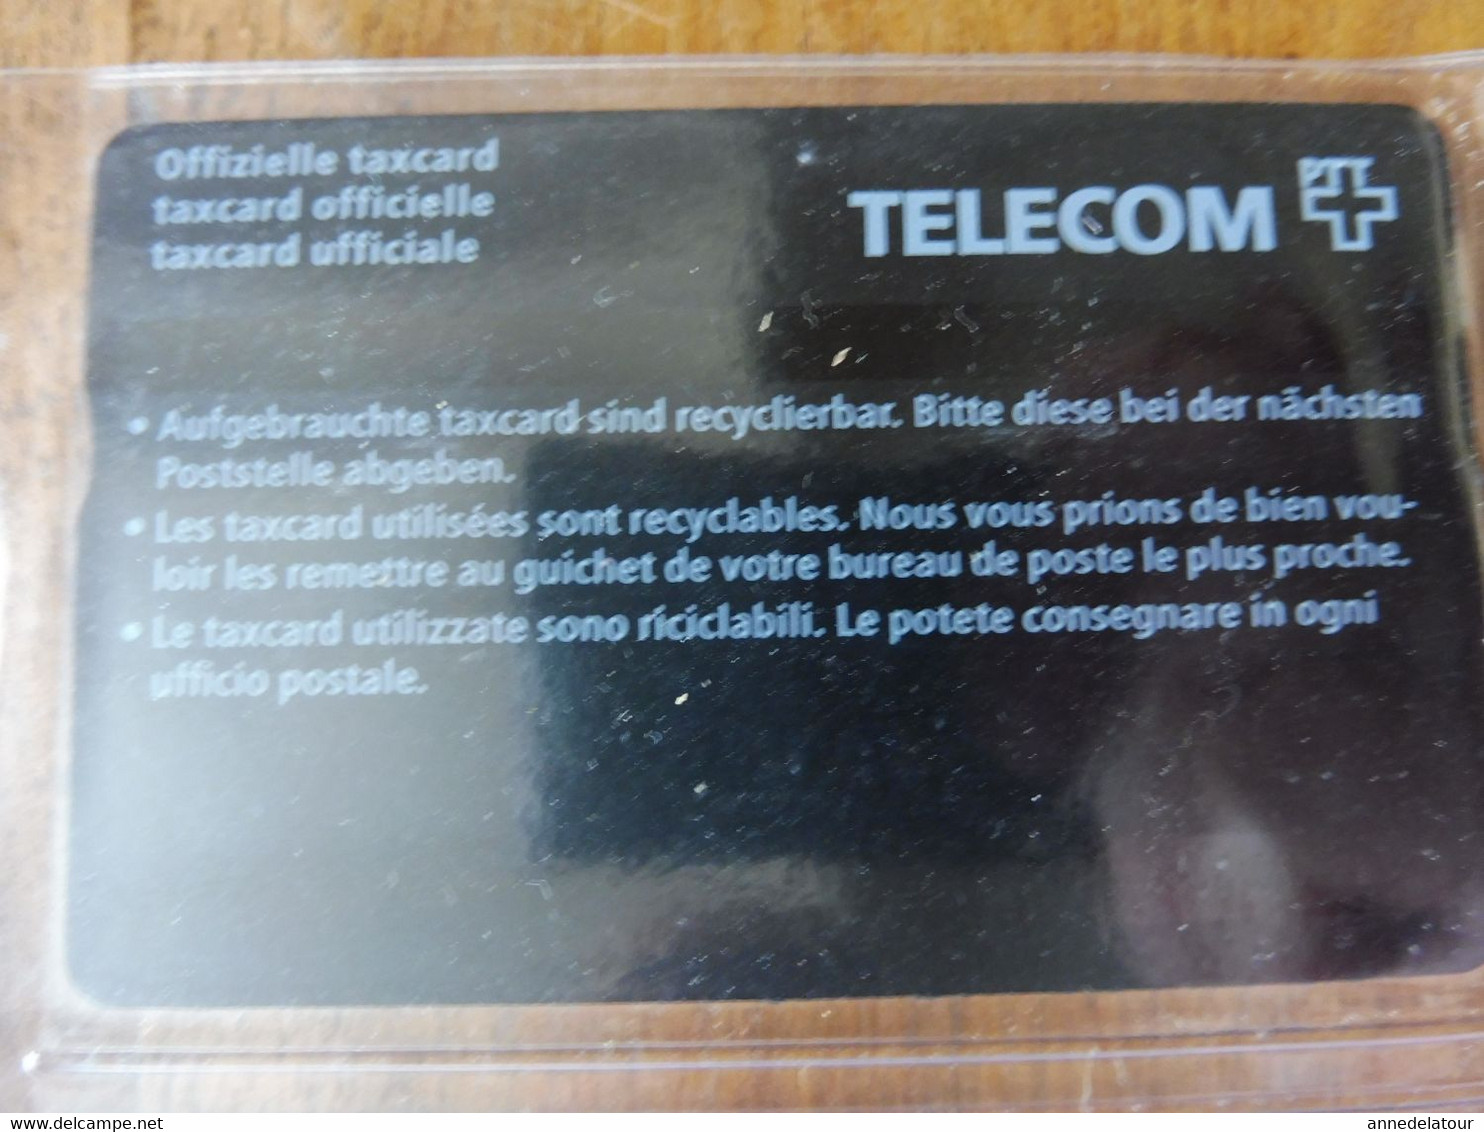 8 télécartes ( TAXCARD ) origine TELECOM SUISSE